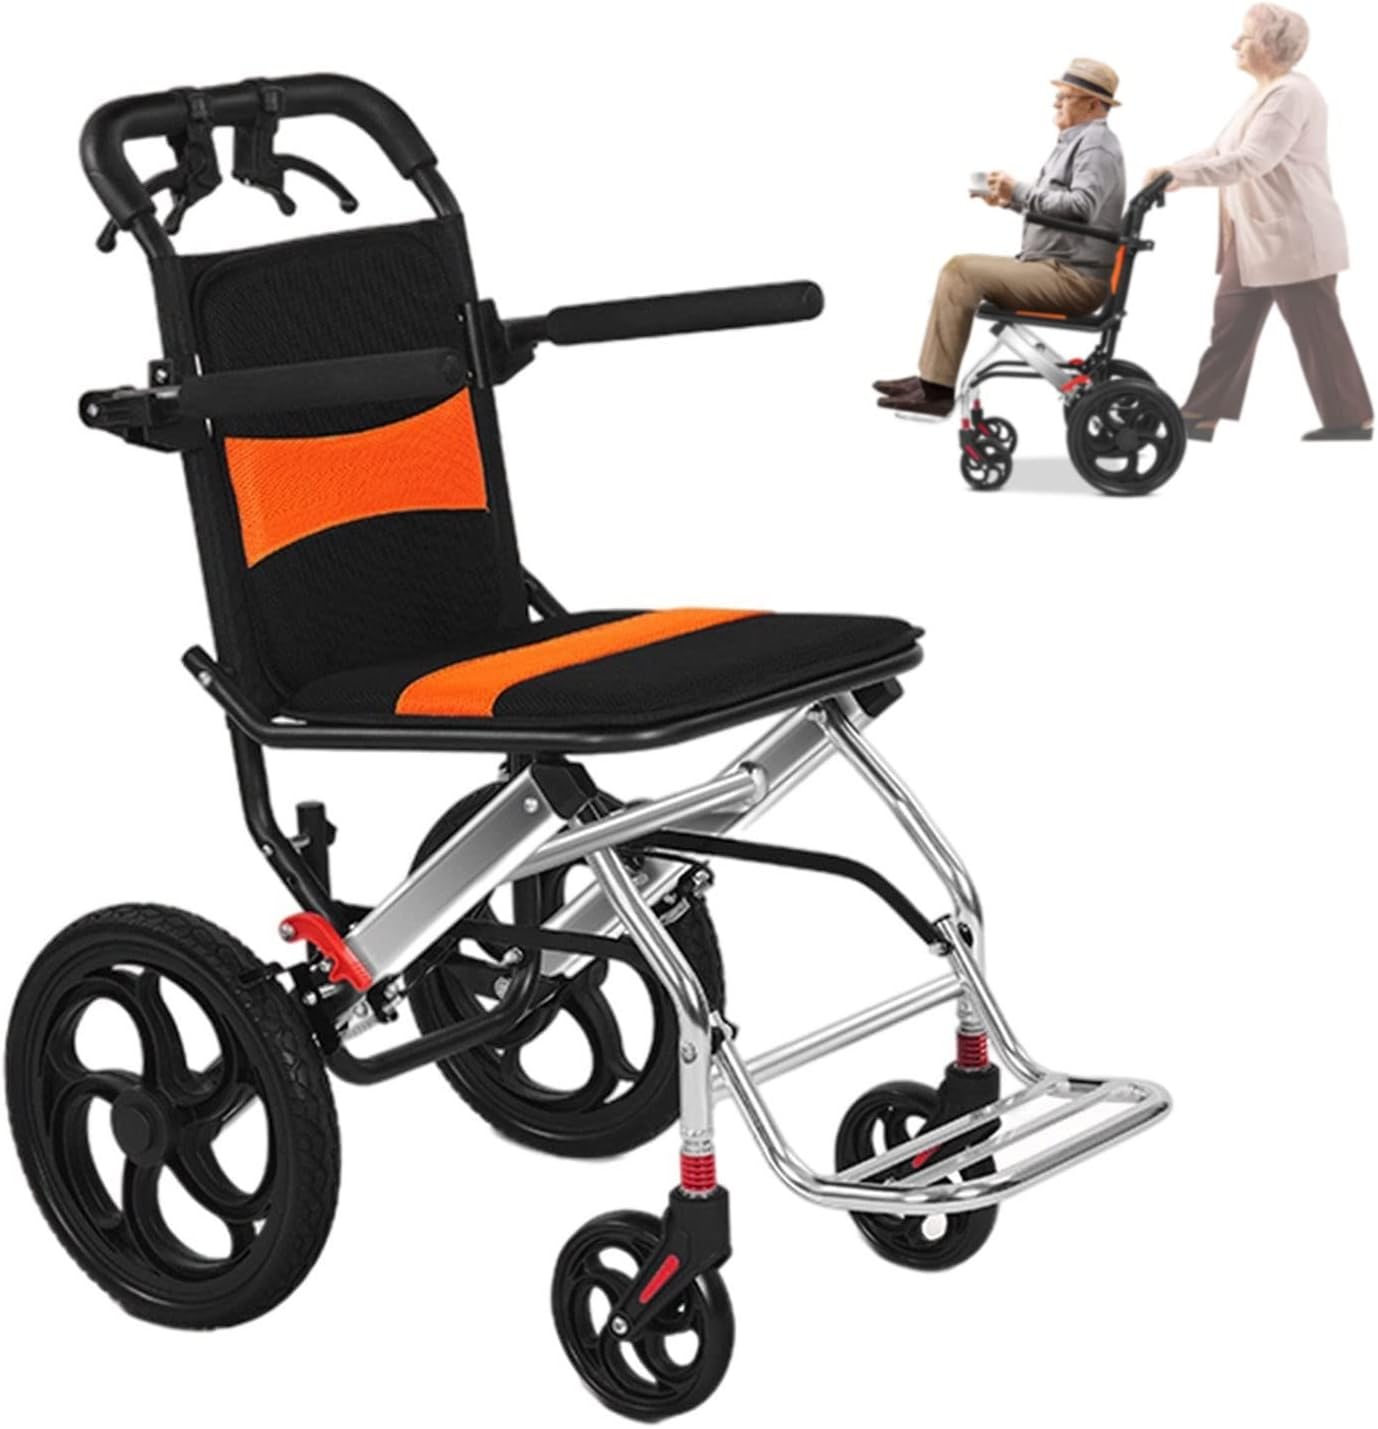 Transport Travel Wheelchair for Adults I Portable Folding Travel Wheelchair I Meubon